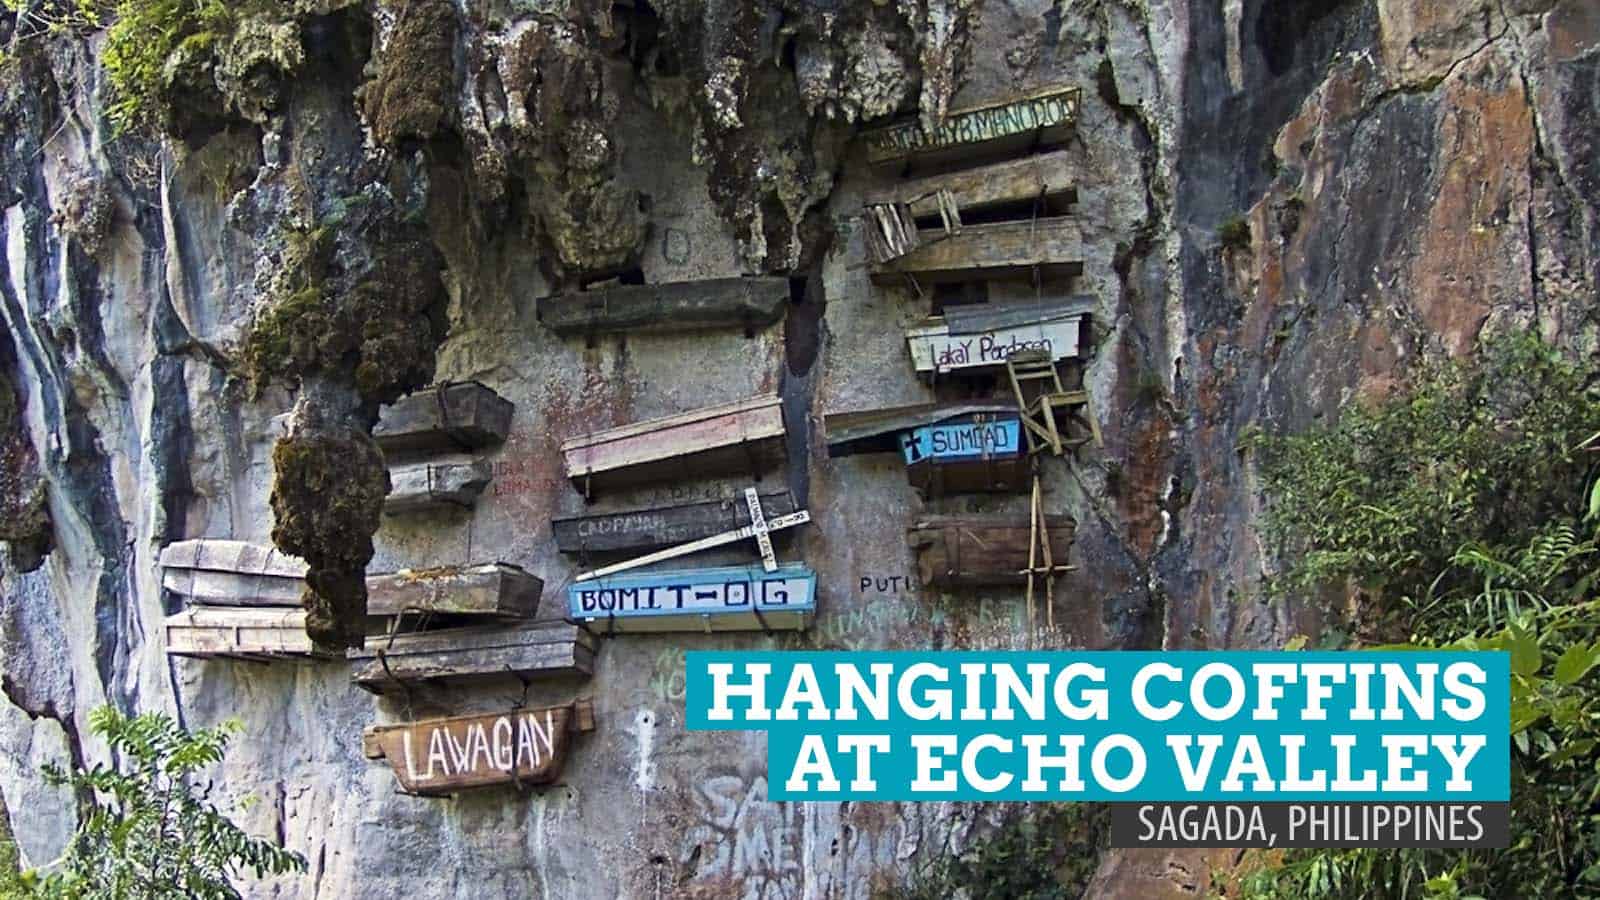 The Hanging Coffins at Echo Valley: Sagada, Philippines